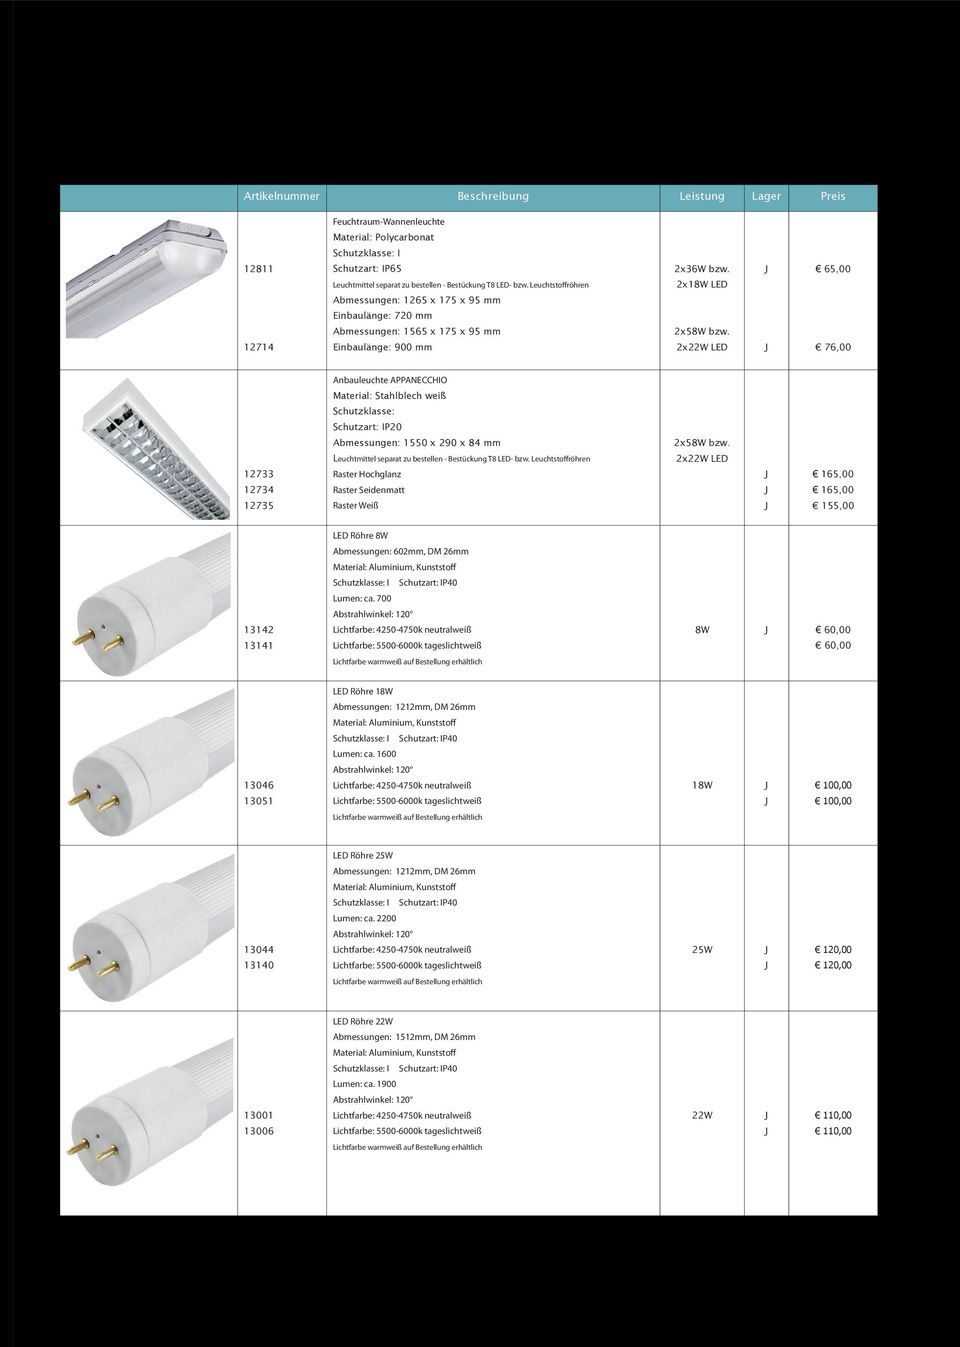 2x22W LED 65,00 76,00 Anbauleuchte APPAECCHIO Material: Stahlblech weiß Schutzklasse: 12733 12734 12735 Abmessungen: 1550 x 290 x 84 mm Leuchtmittel separat zu bestellen - Bestückung T8 LED- bzw.